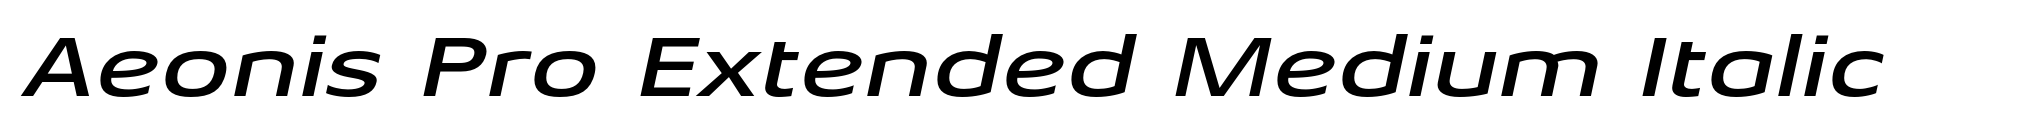 Aeonis Pro Extended Medium Italic image